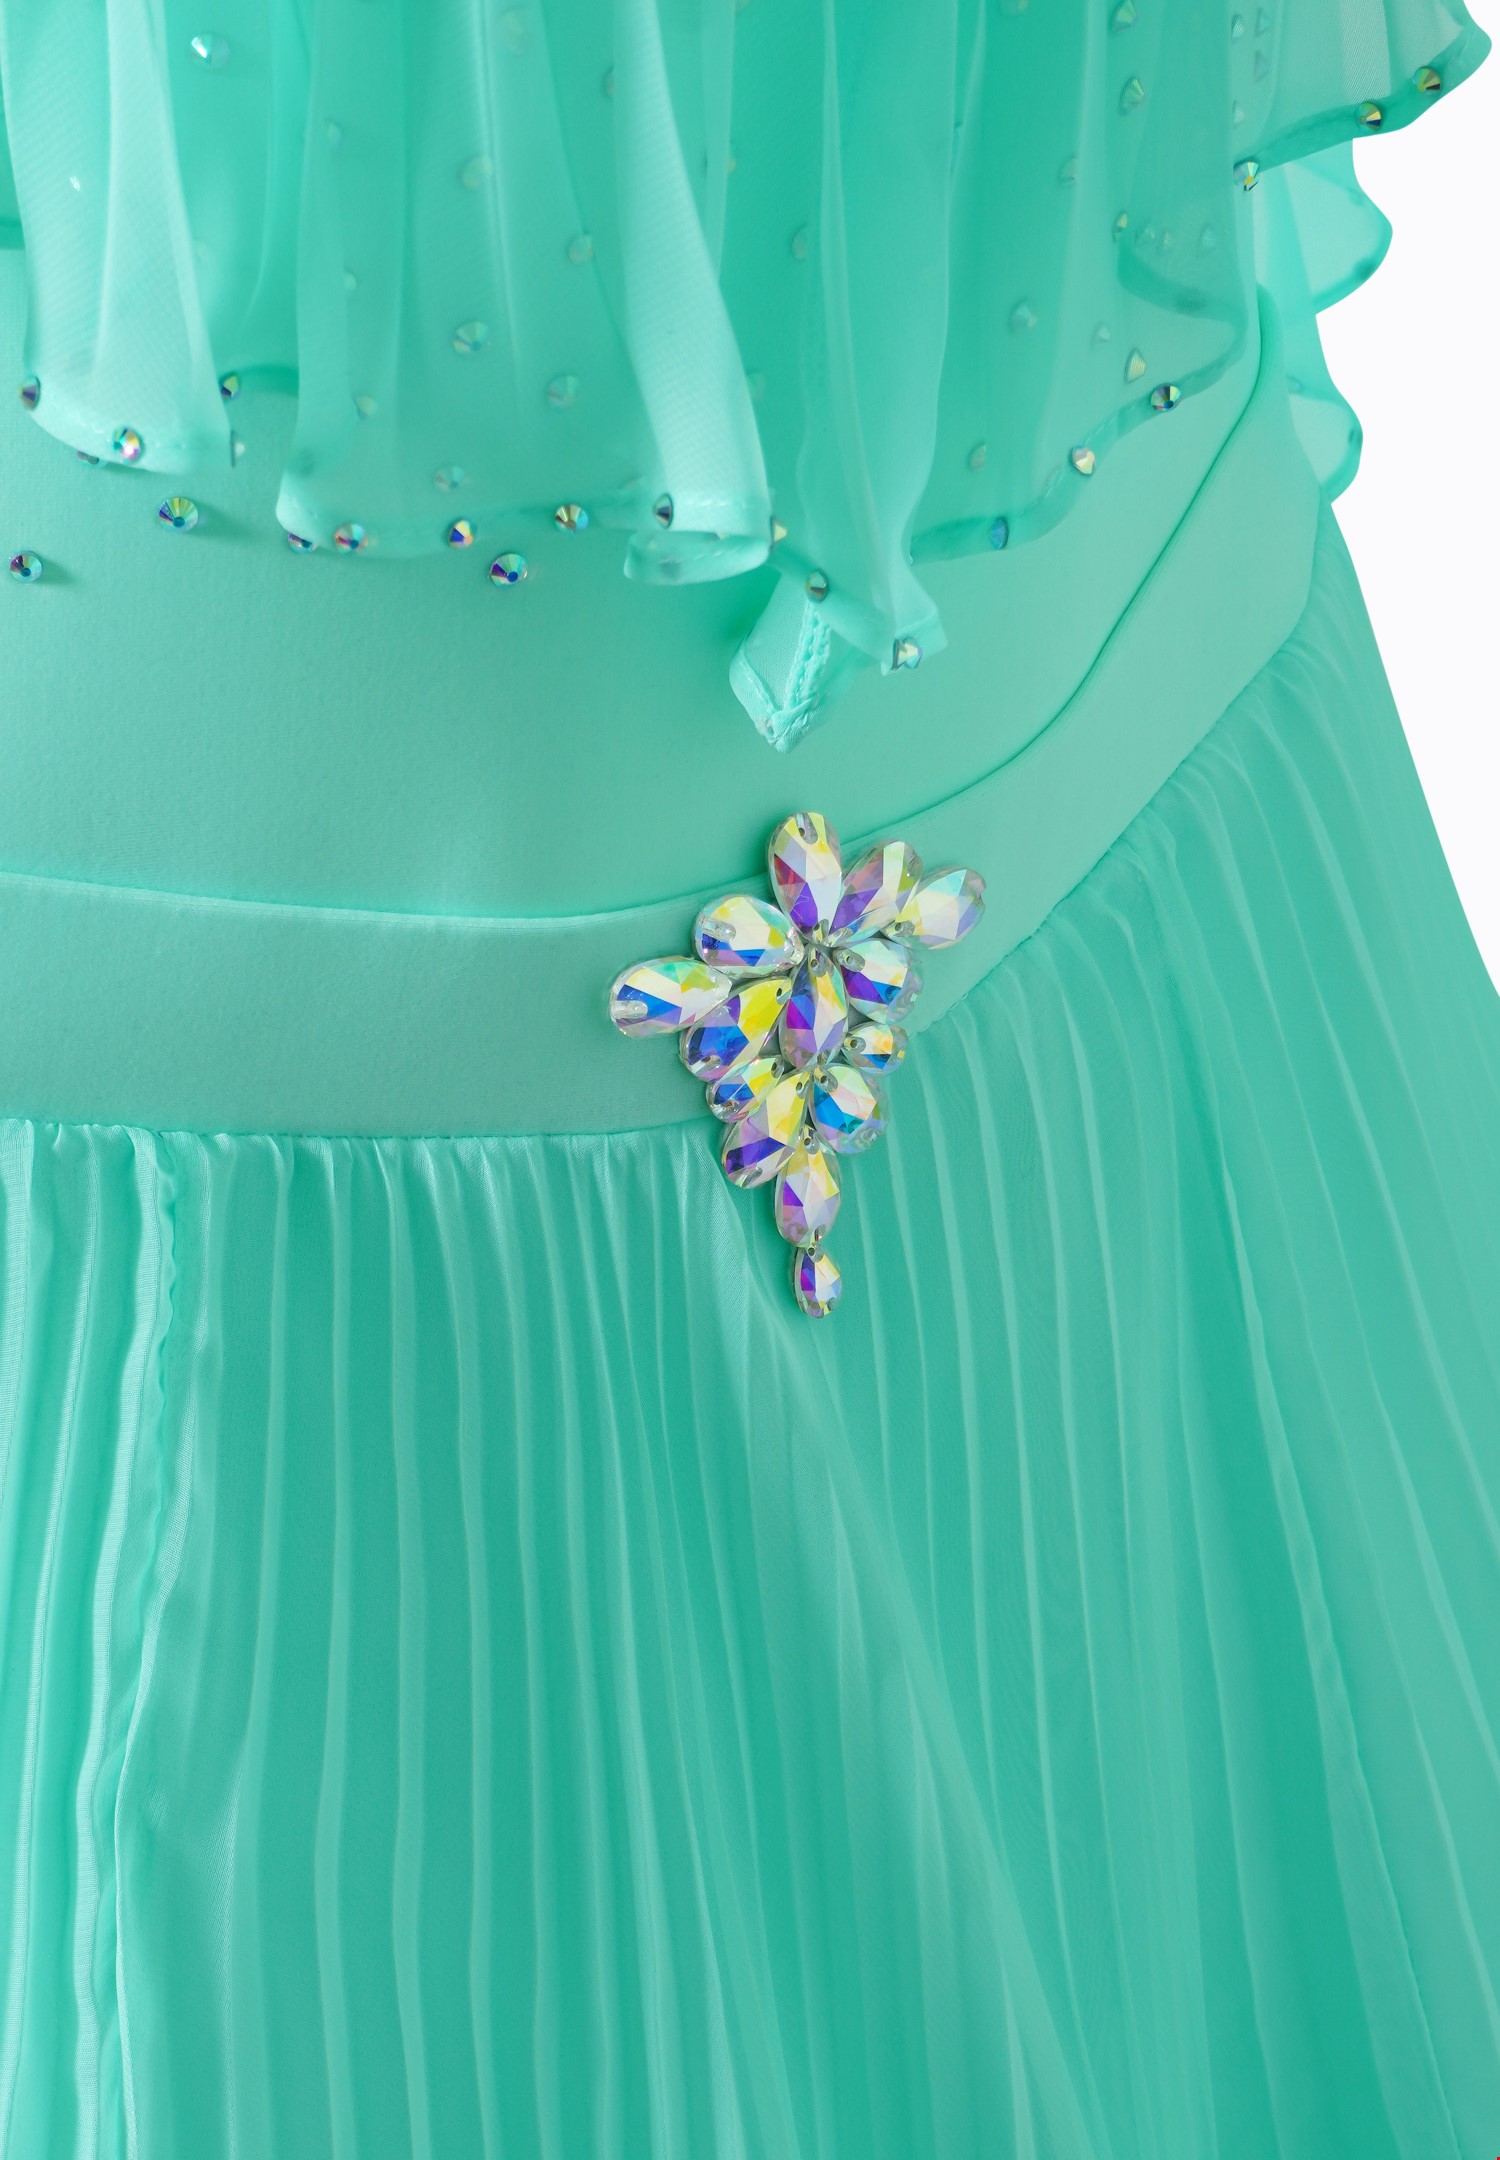 Flowy Pleated Skirt Ballroom Smooth Dress PCWB190101